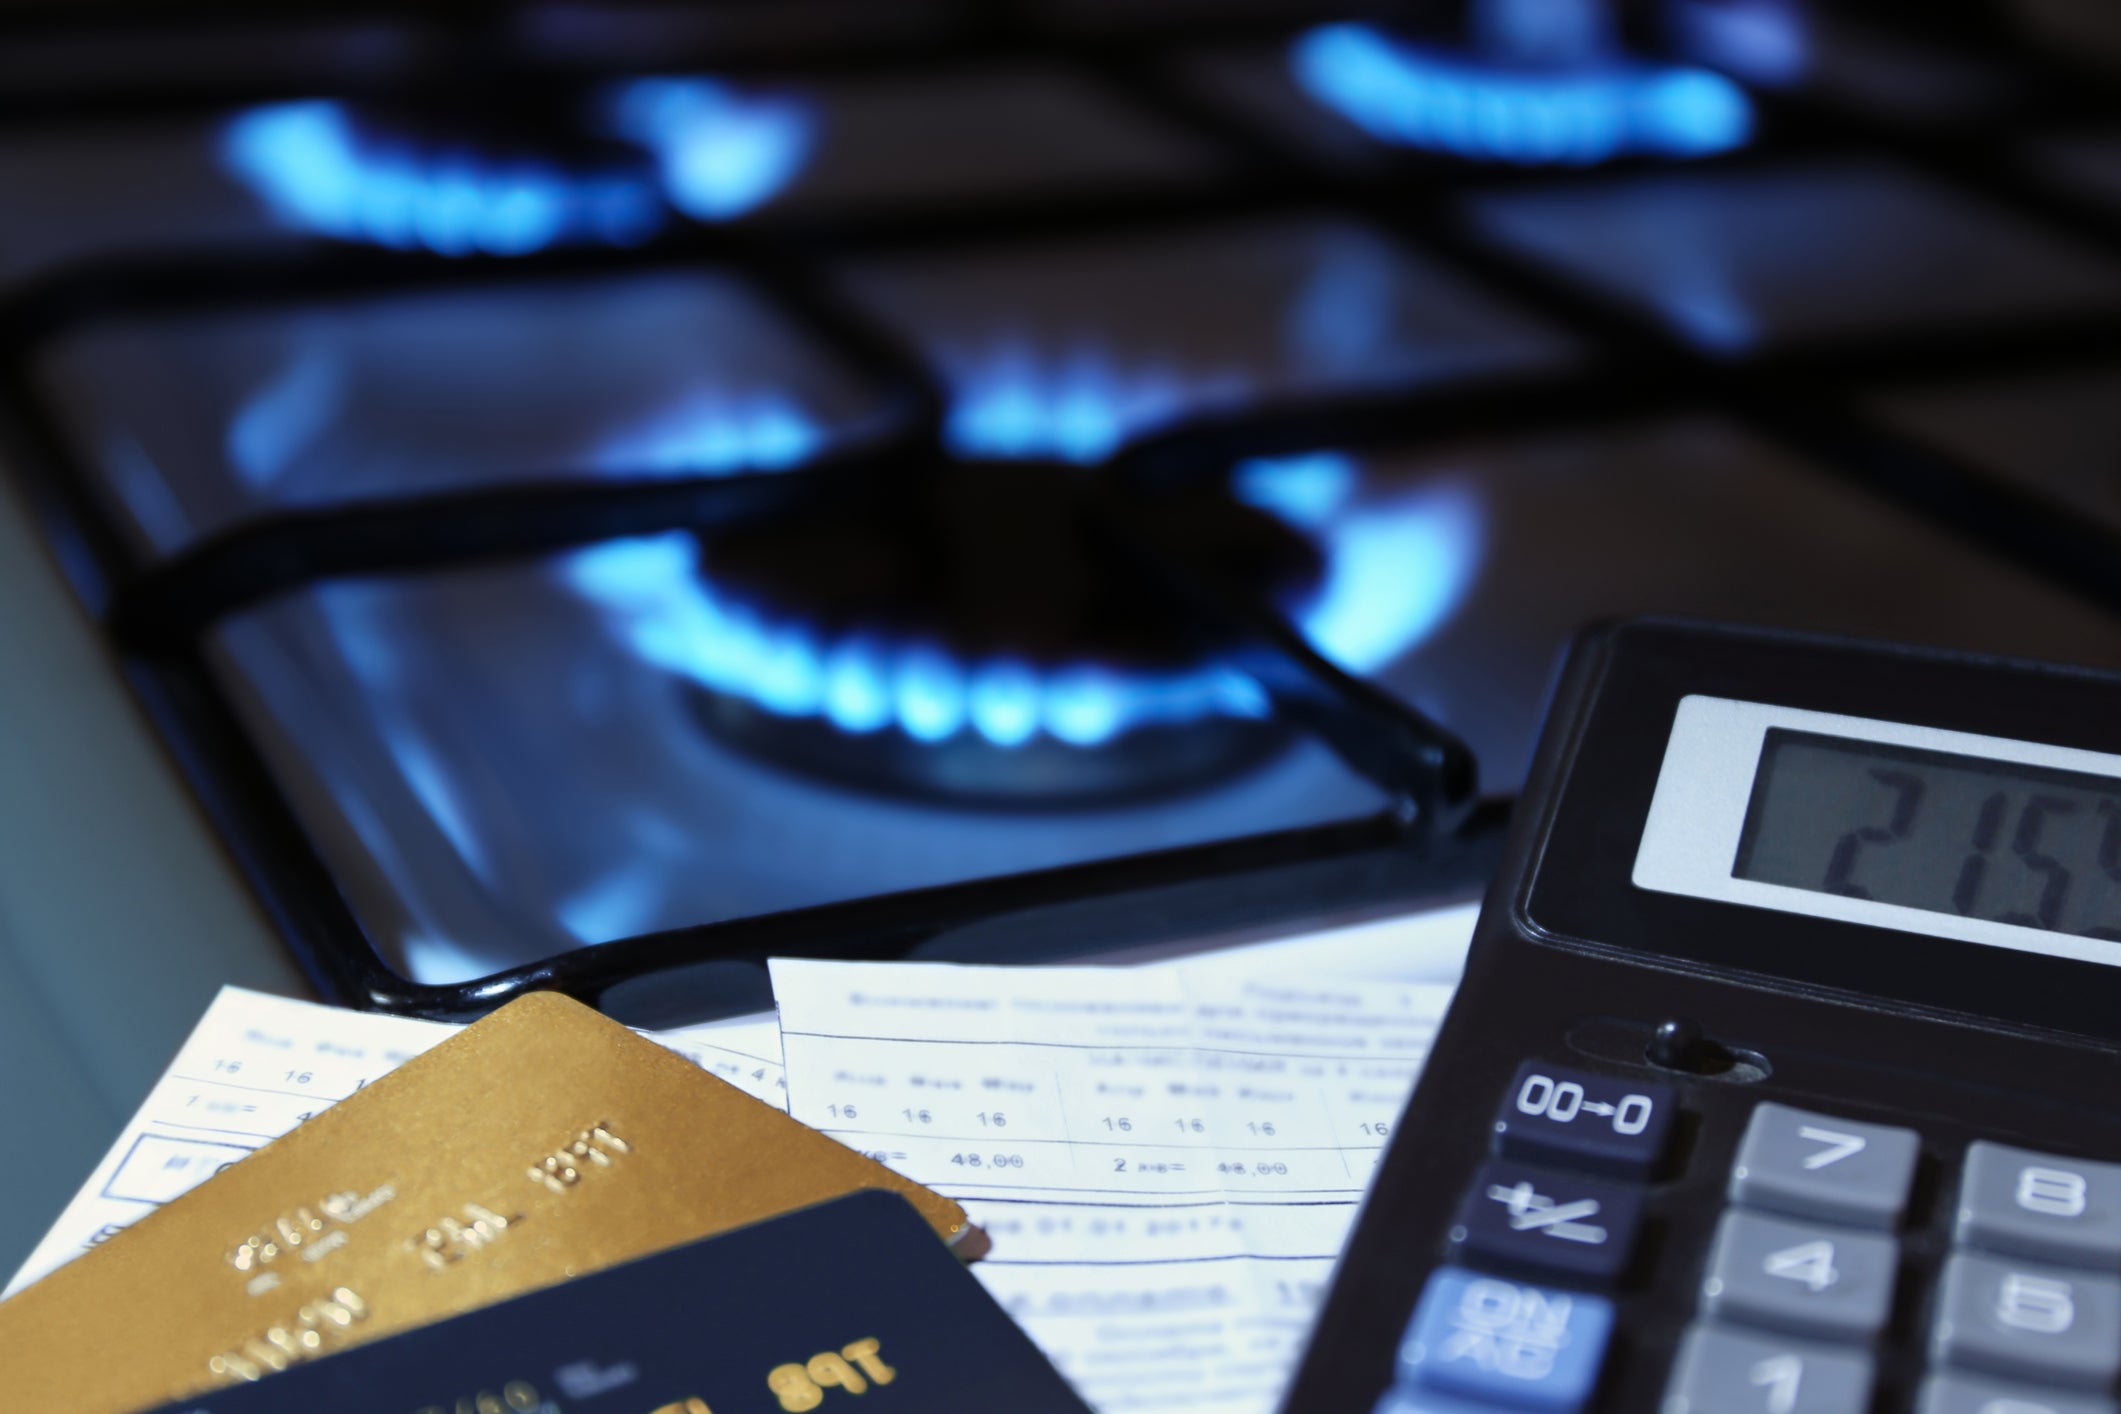 Bank card, calculator and burning gas stove